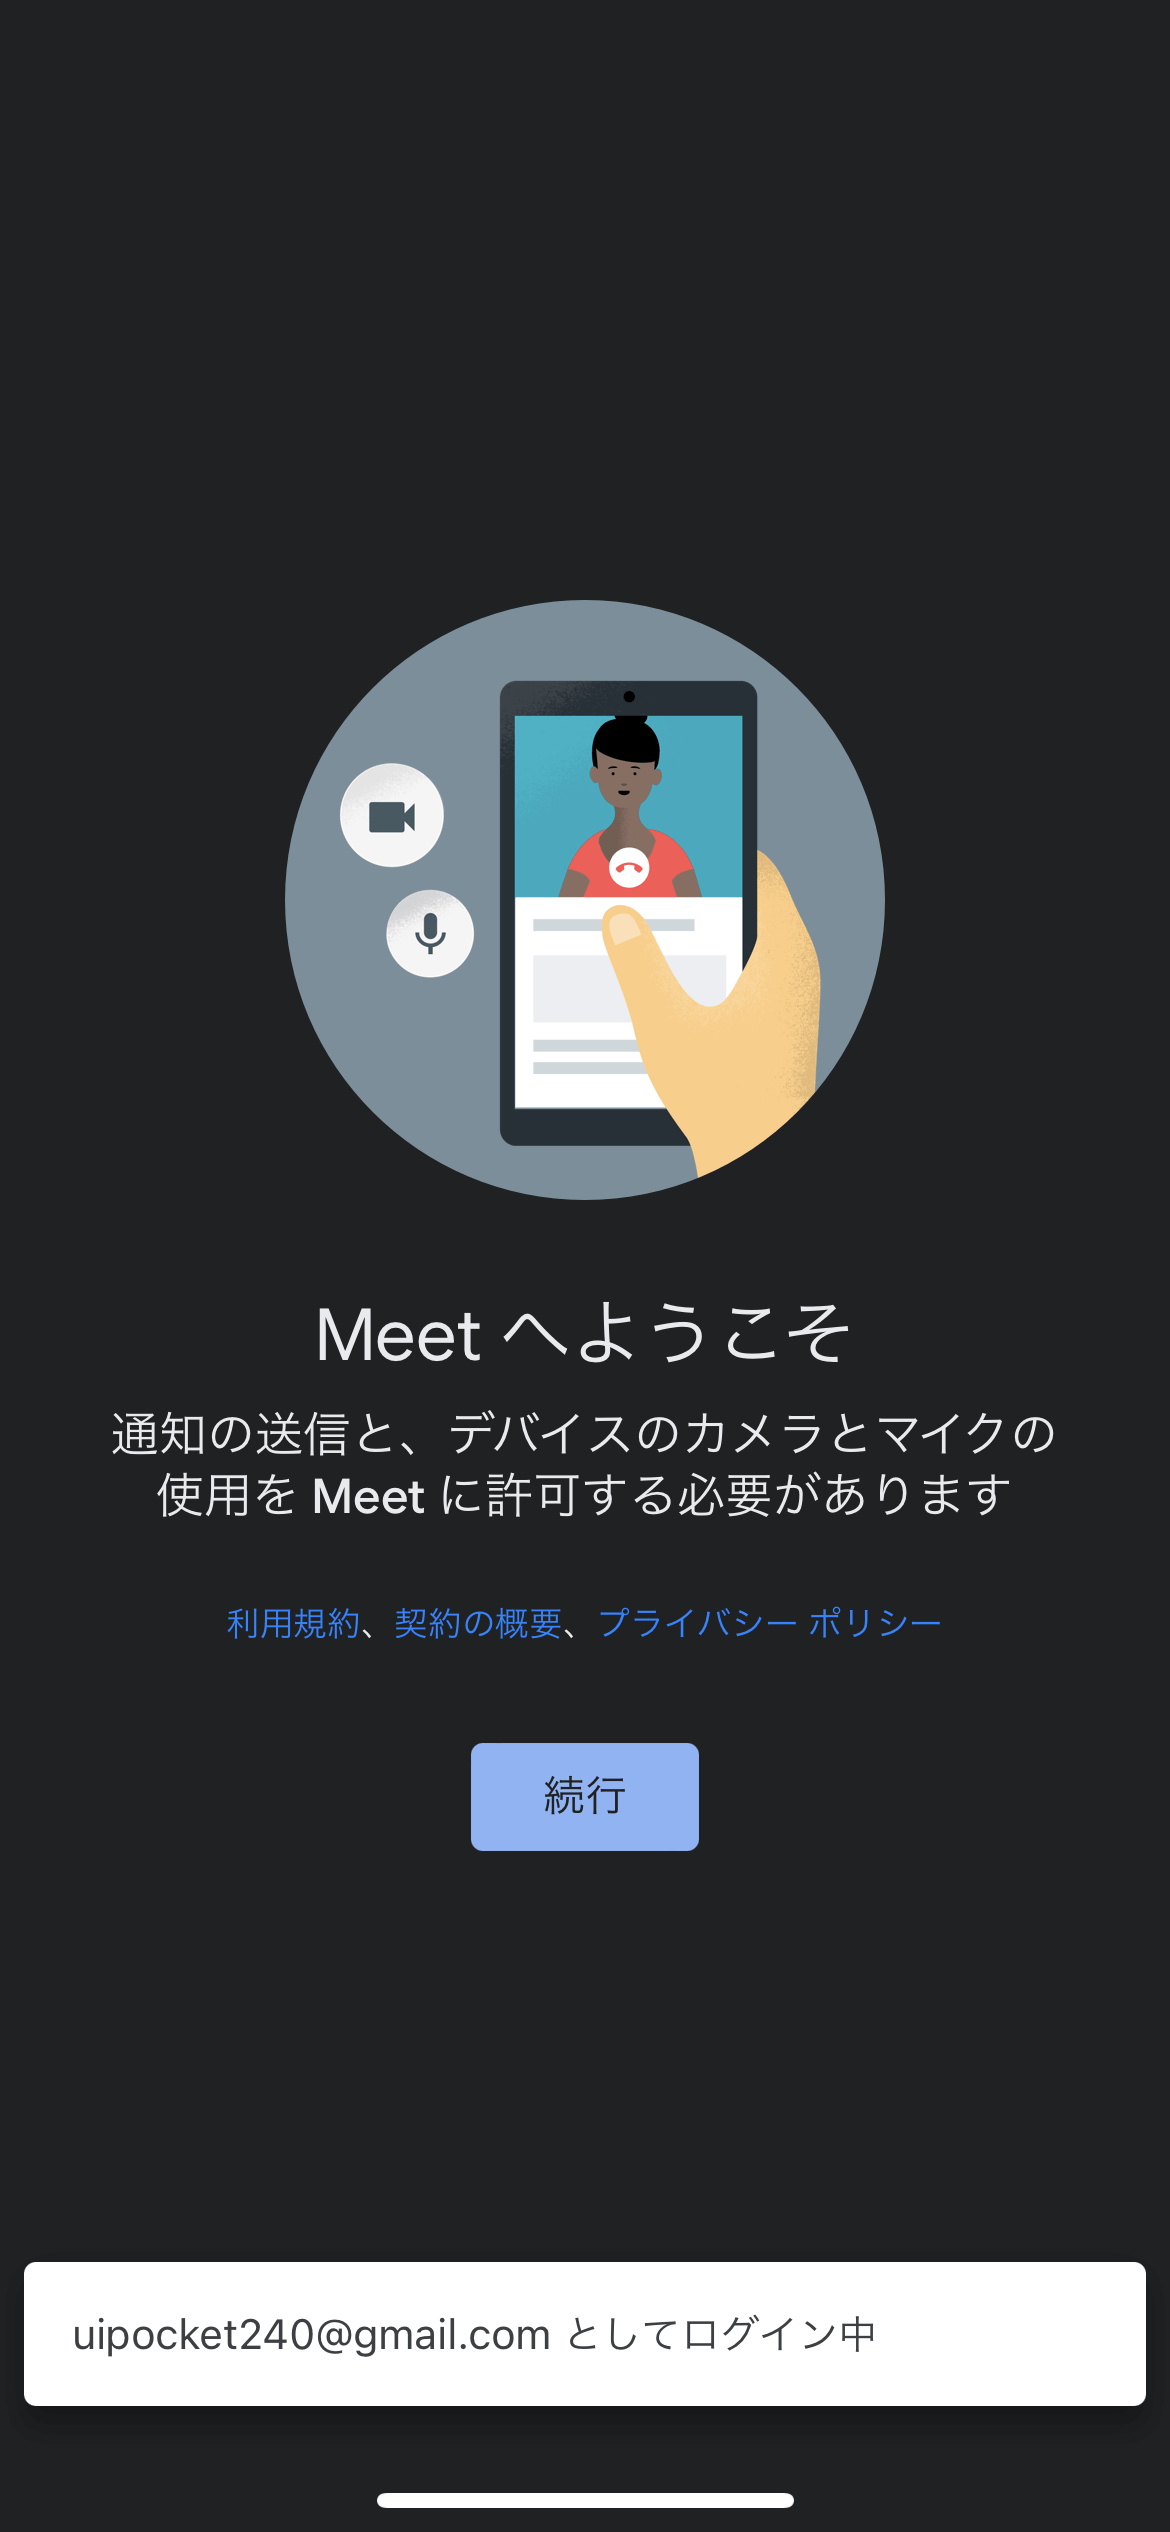 Google Meet オンボーディング screen